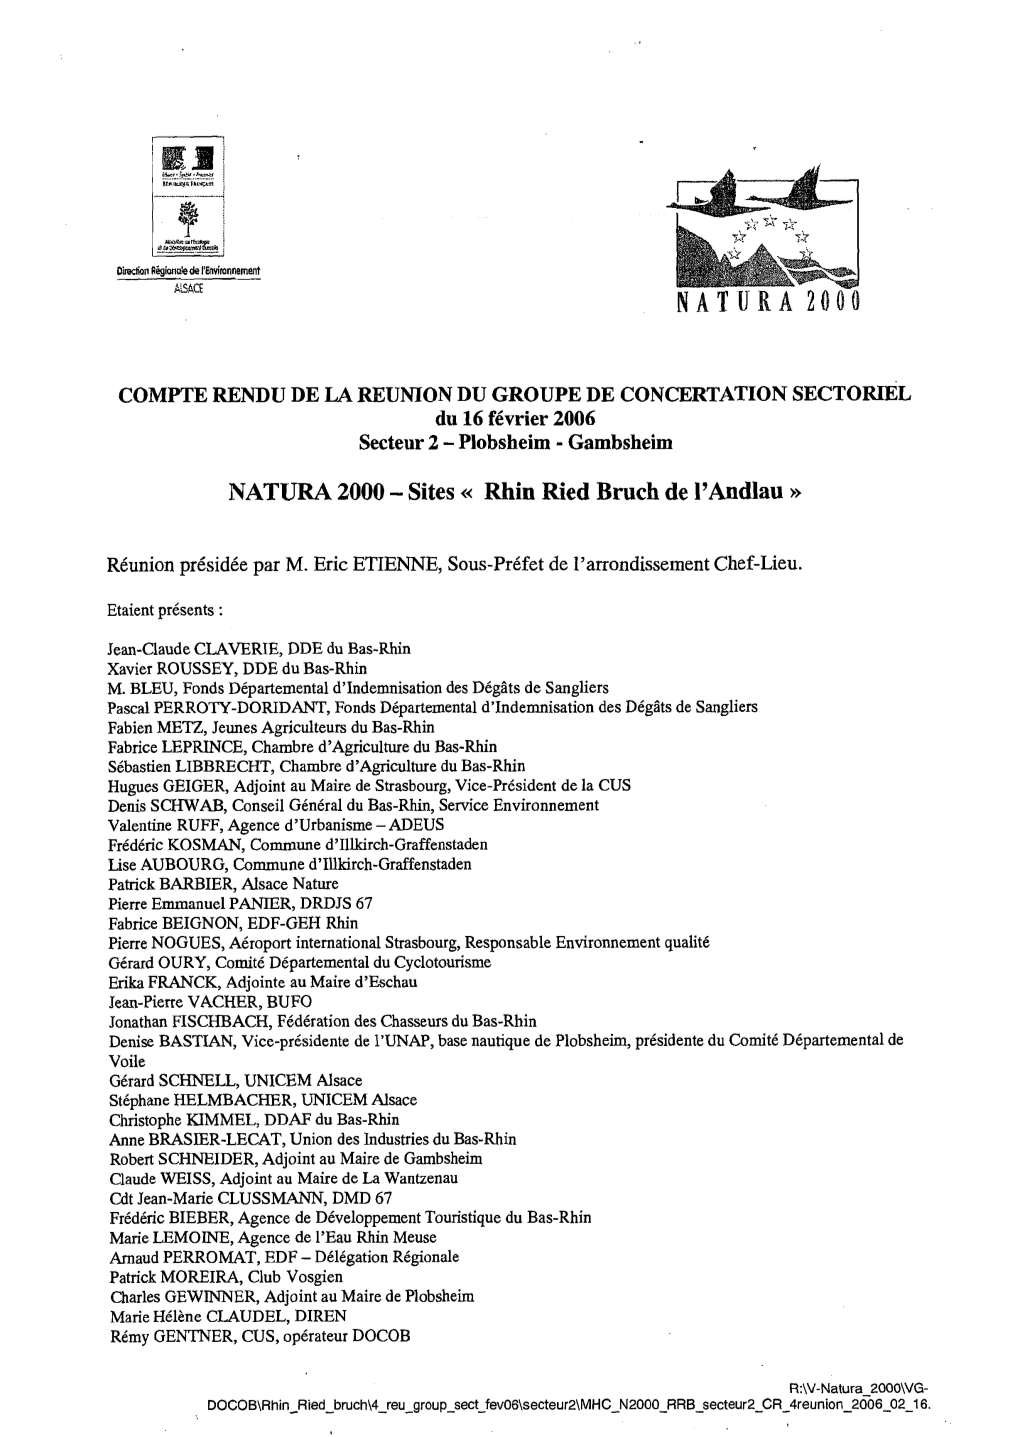 NATURA 2000 - Sites « Rhin Ried Bruch De 1'Andlau »